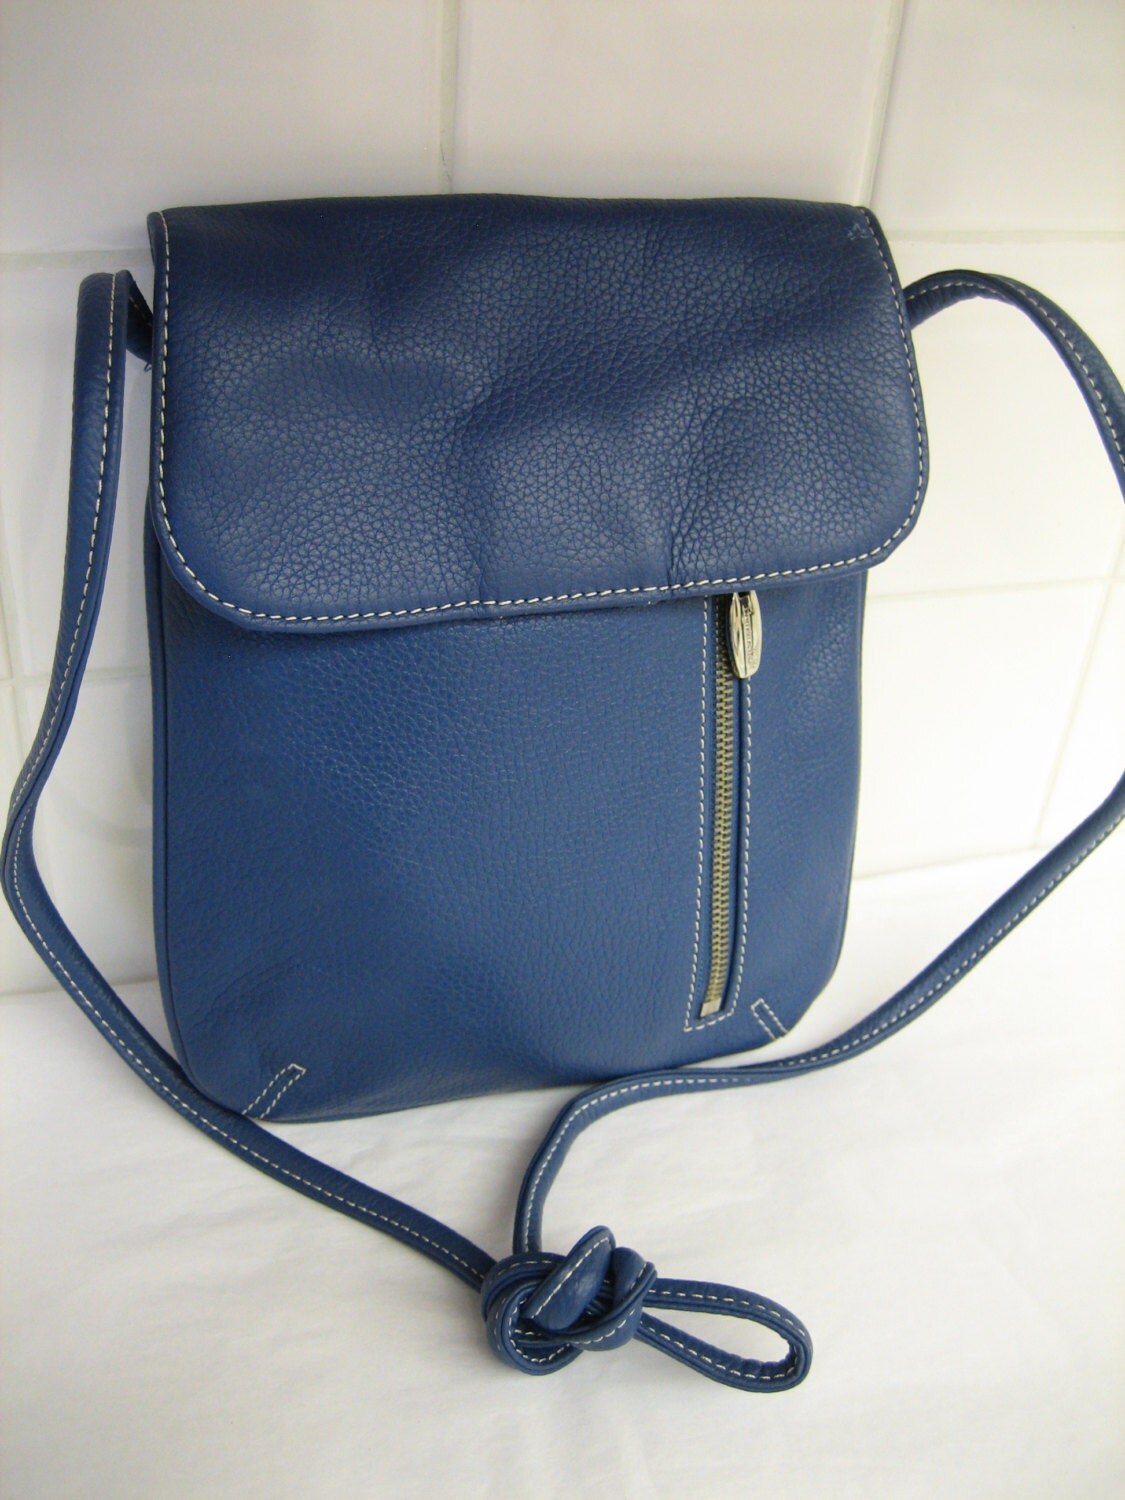 Vintage Tignanello Crossbody Messenger Purse Teal Blue Leather